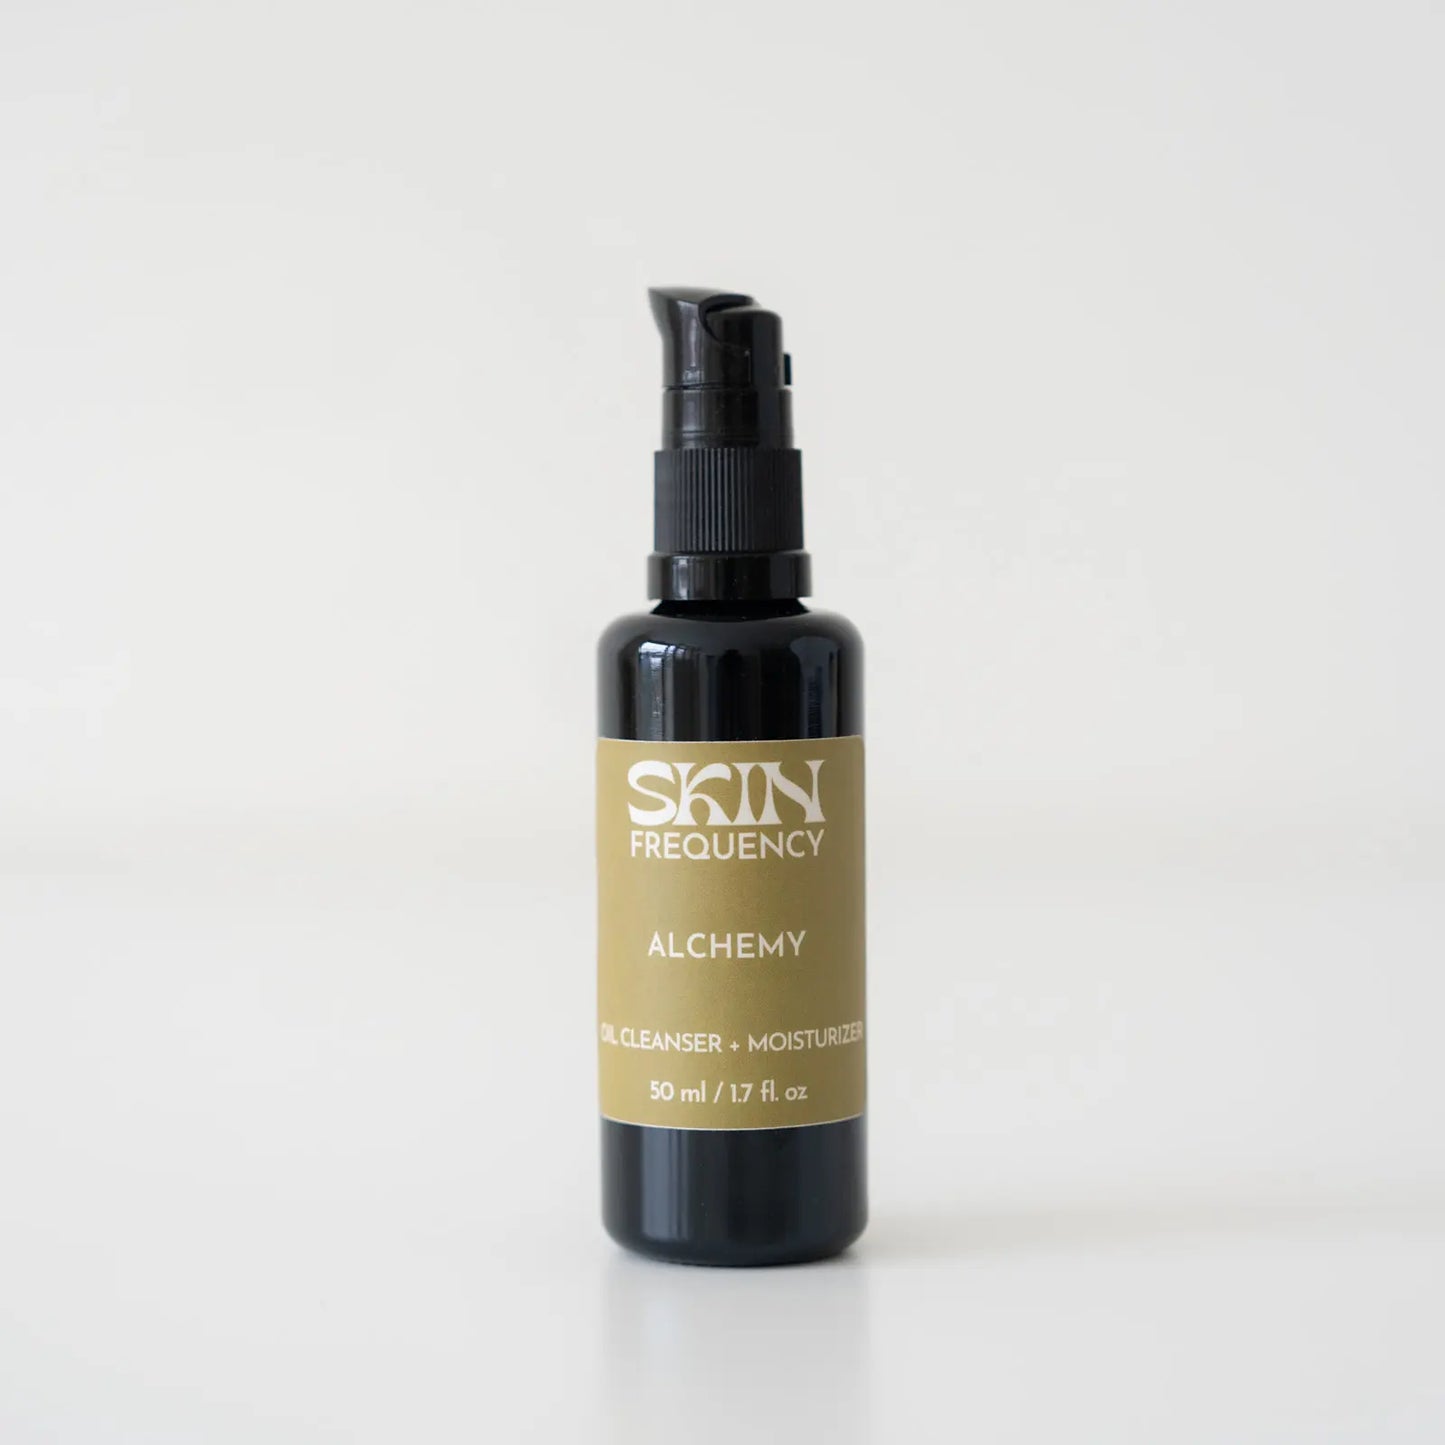 Skin Frequency Alchemy Oil Cleanser + Moisturizer